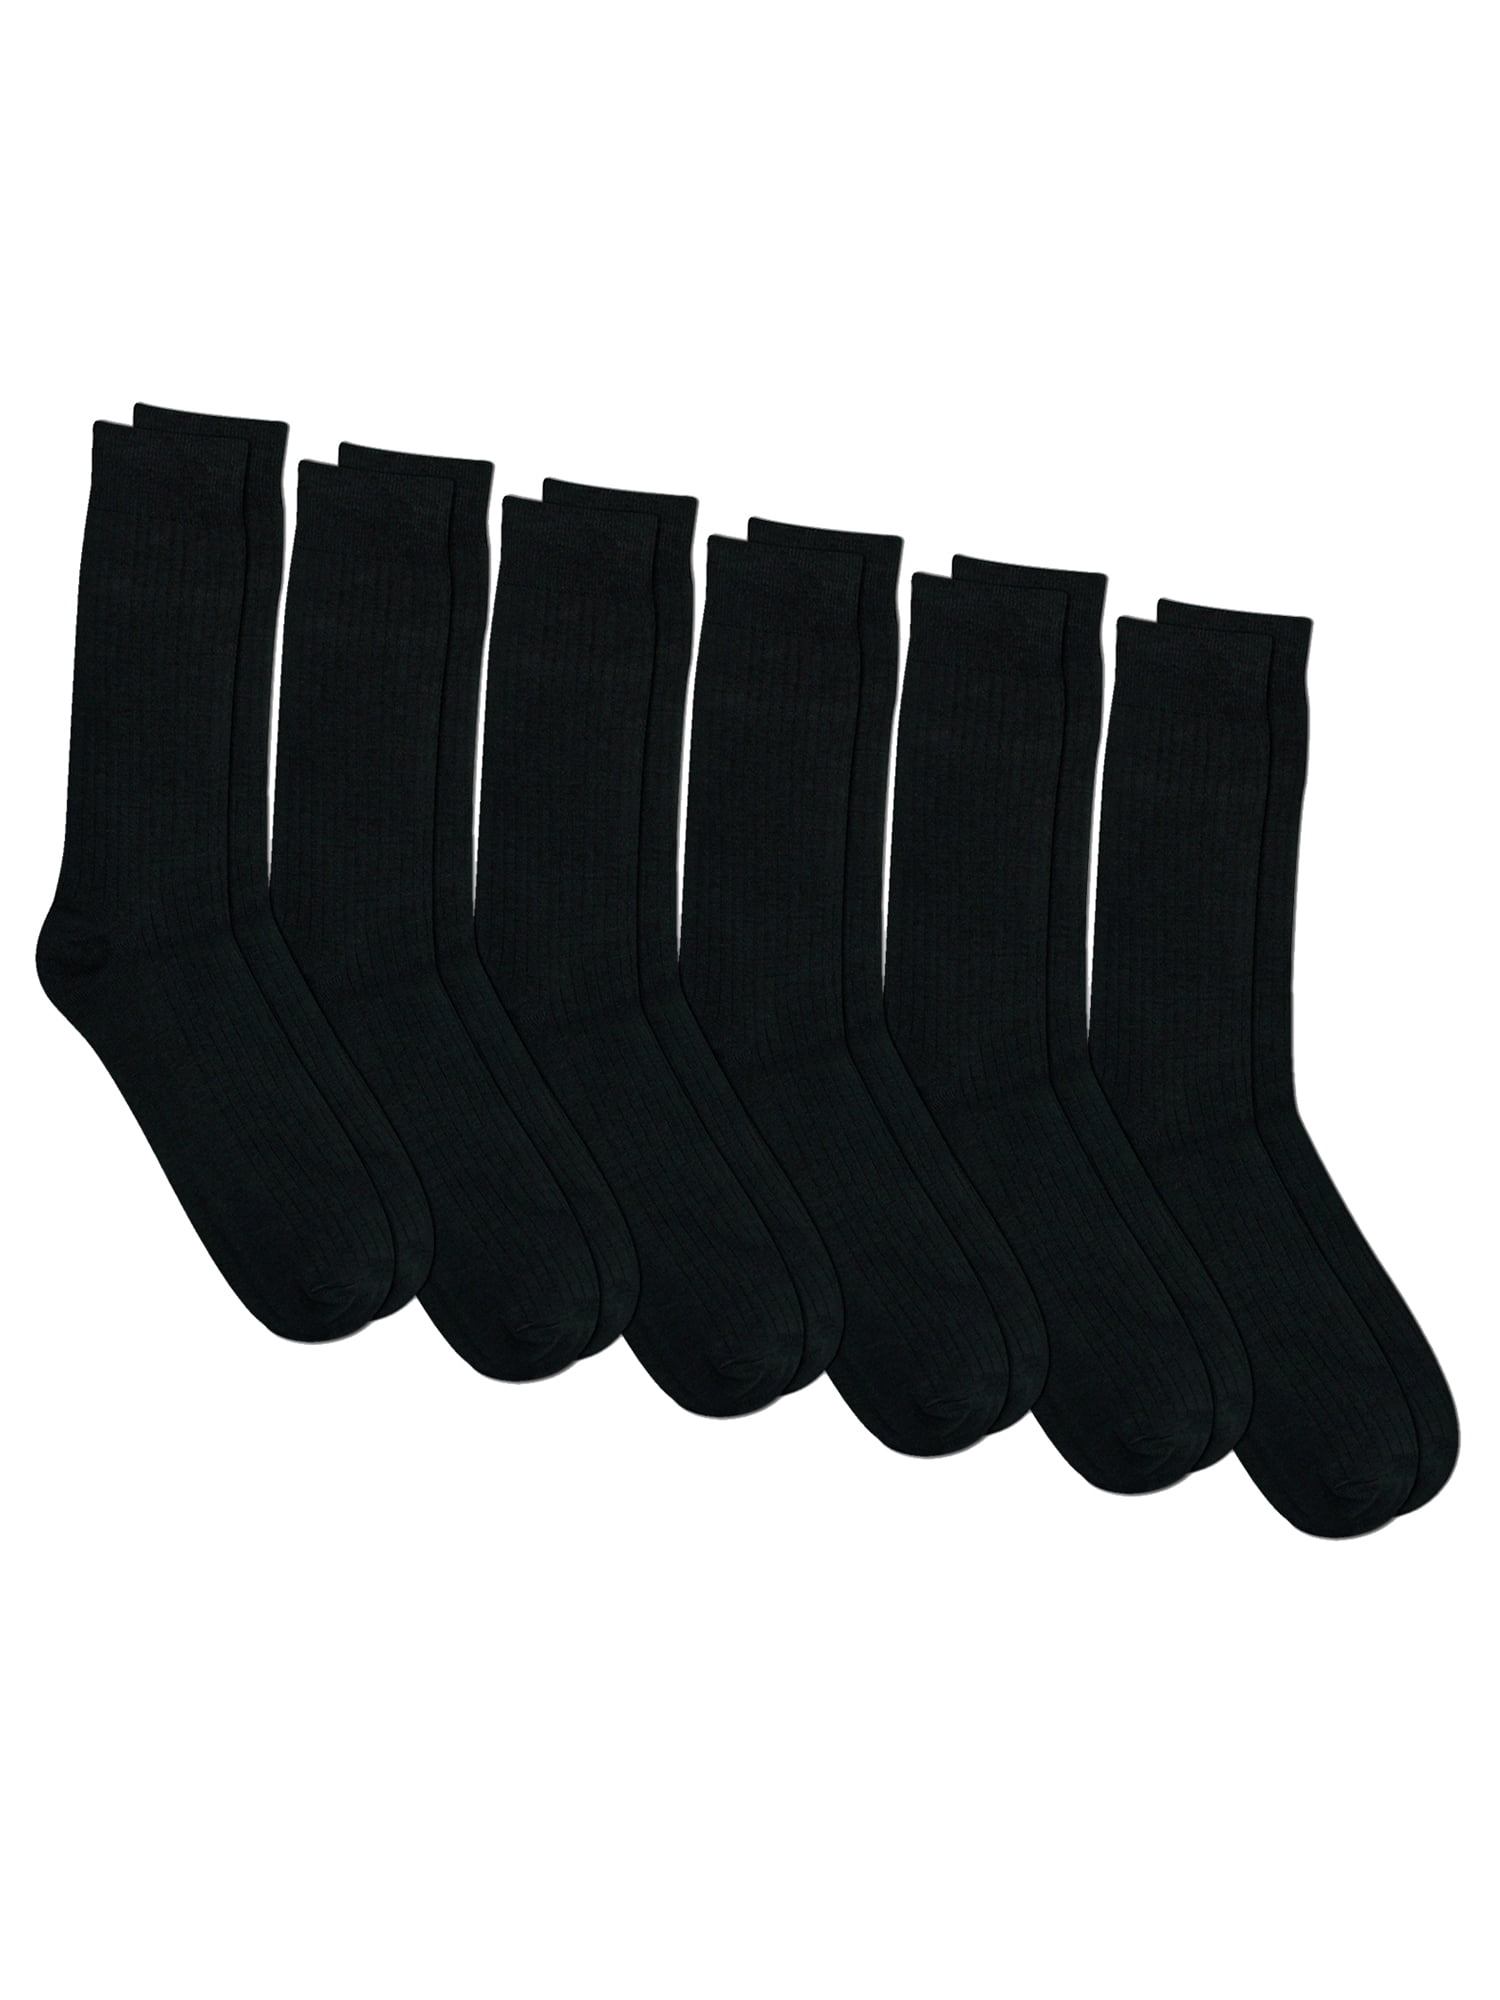 Athletic Sillky Socks Men Crew Imported Socks Men's Casual Cotton Blend Fashion Socks Black Comfortable Gym Socks 